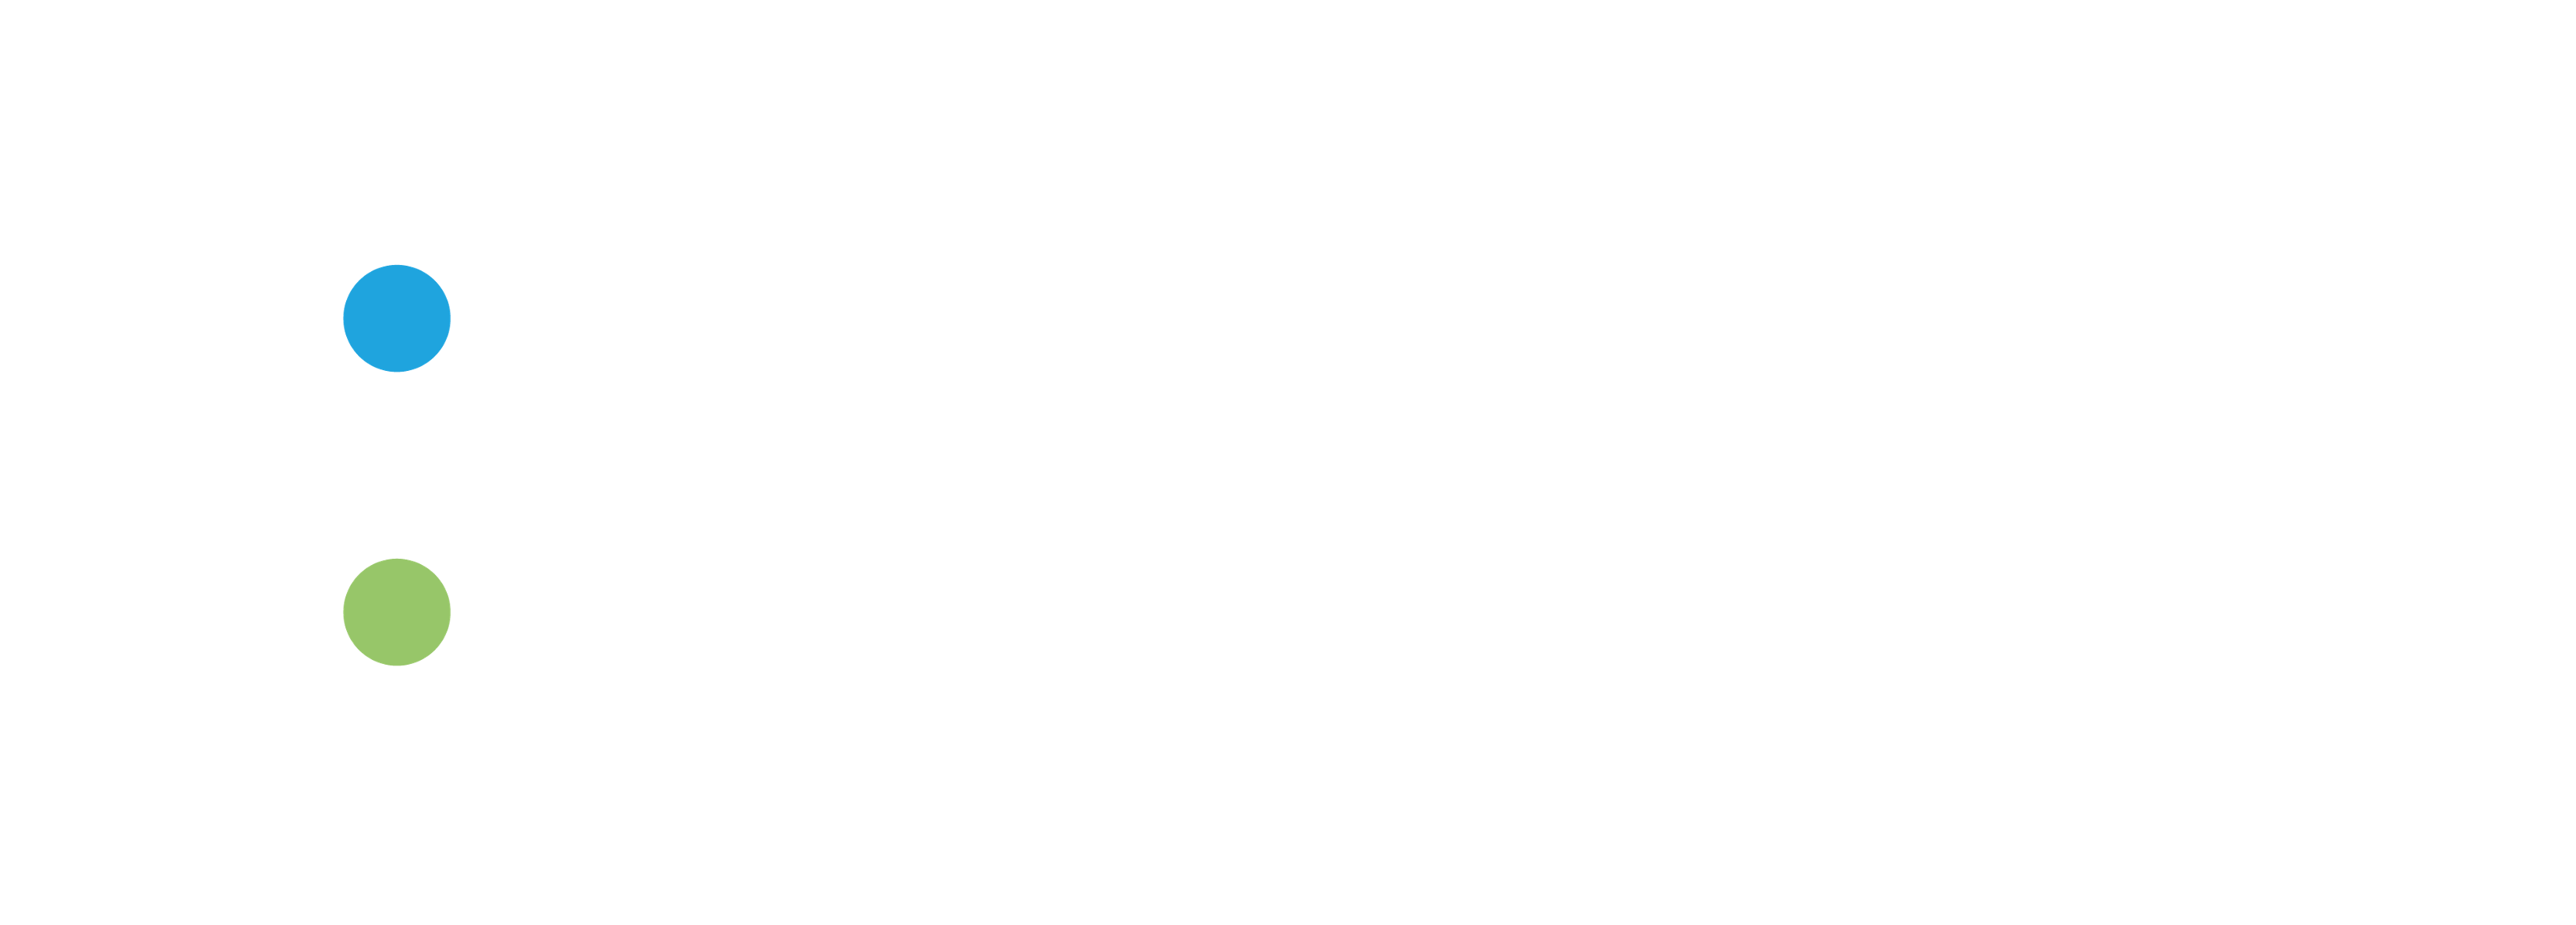 Debtwire-logo-v3 image